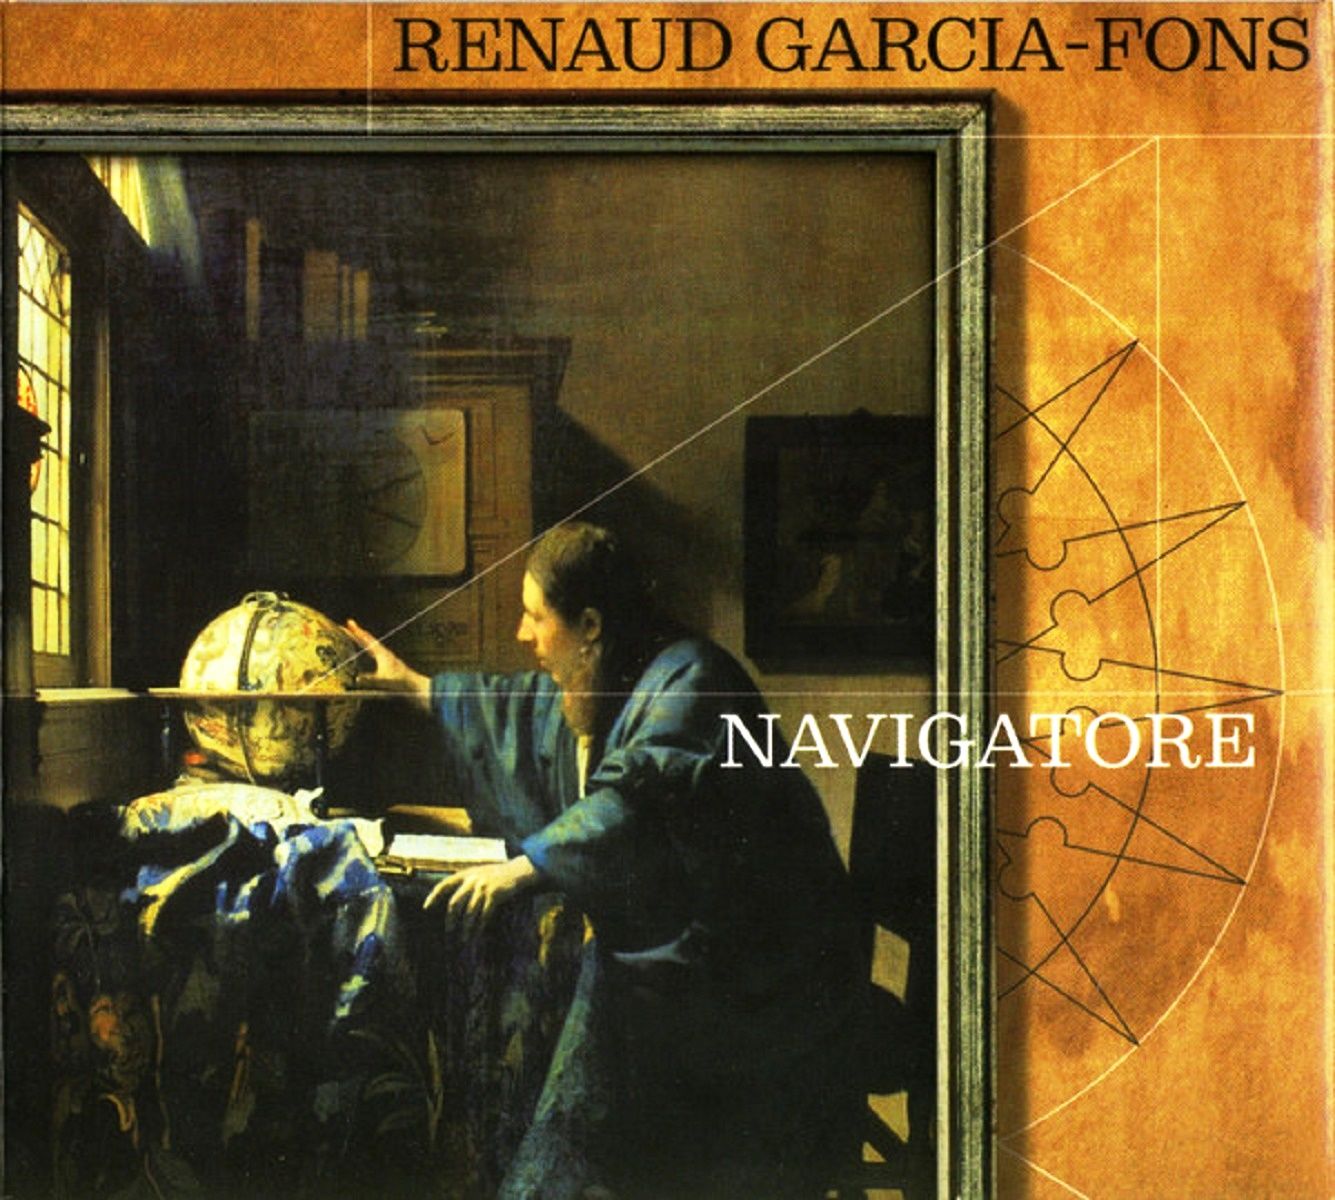 RENEUD GARCIA-FONS - NAVIGATORE (CD) (2001)